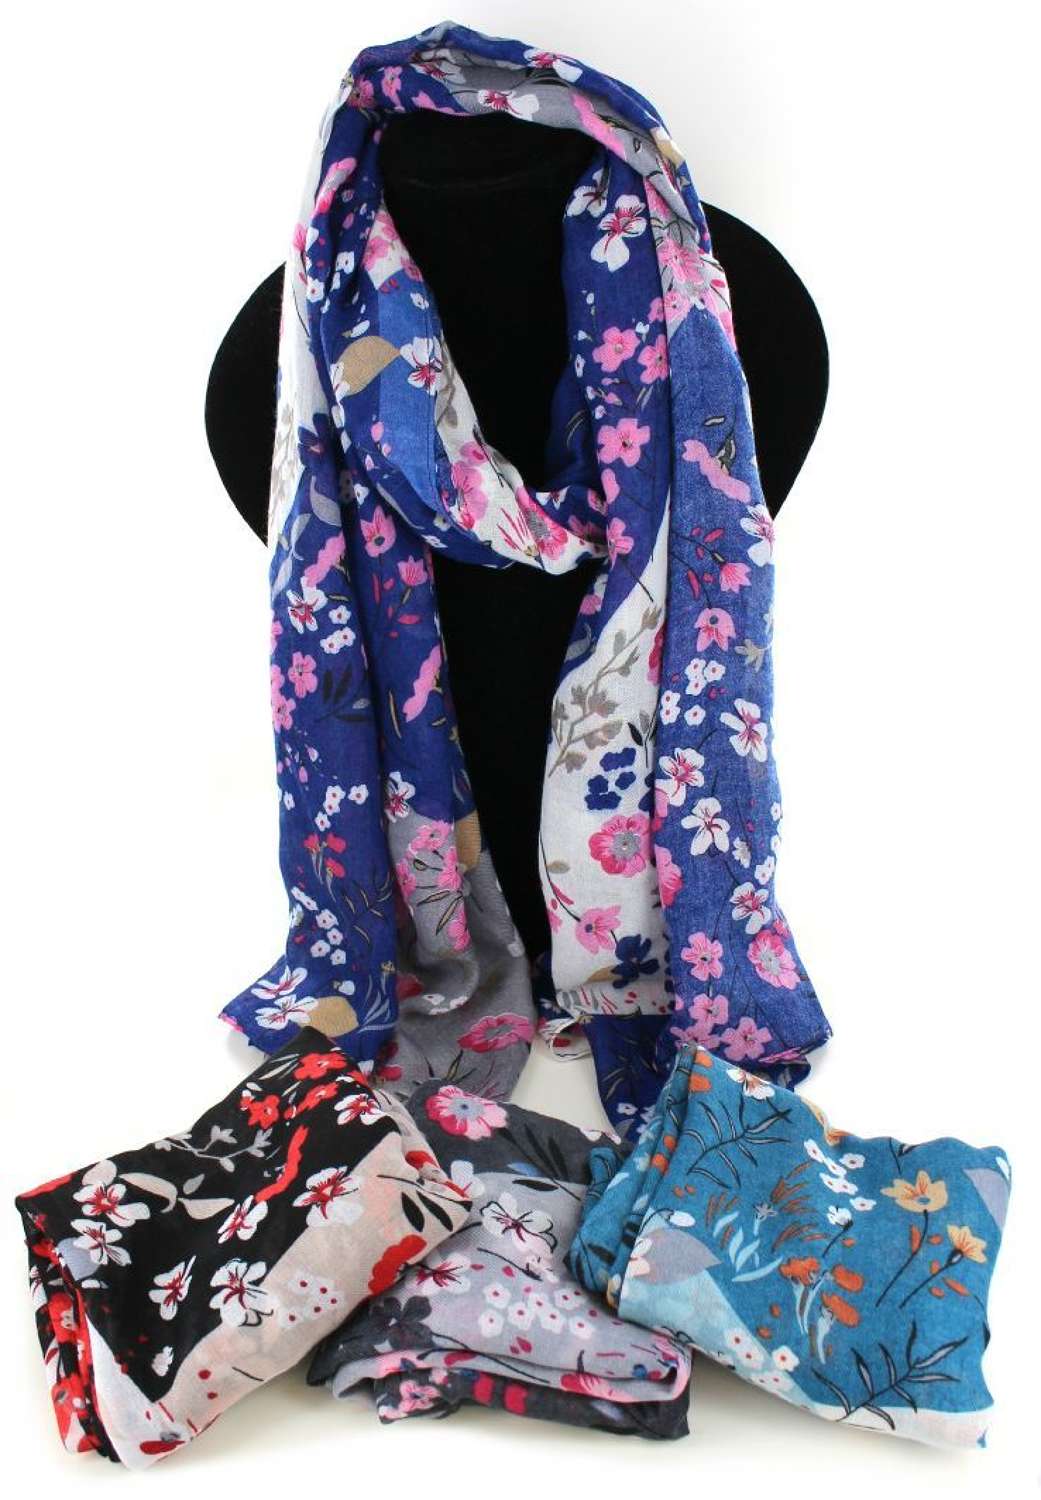 Colourful blossom print scarf.